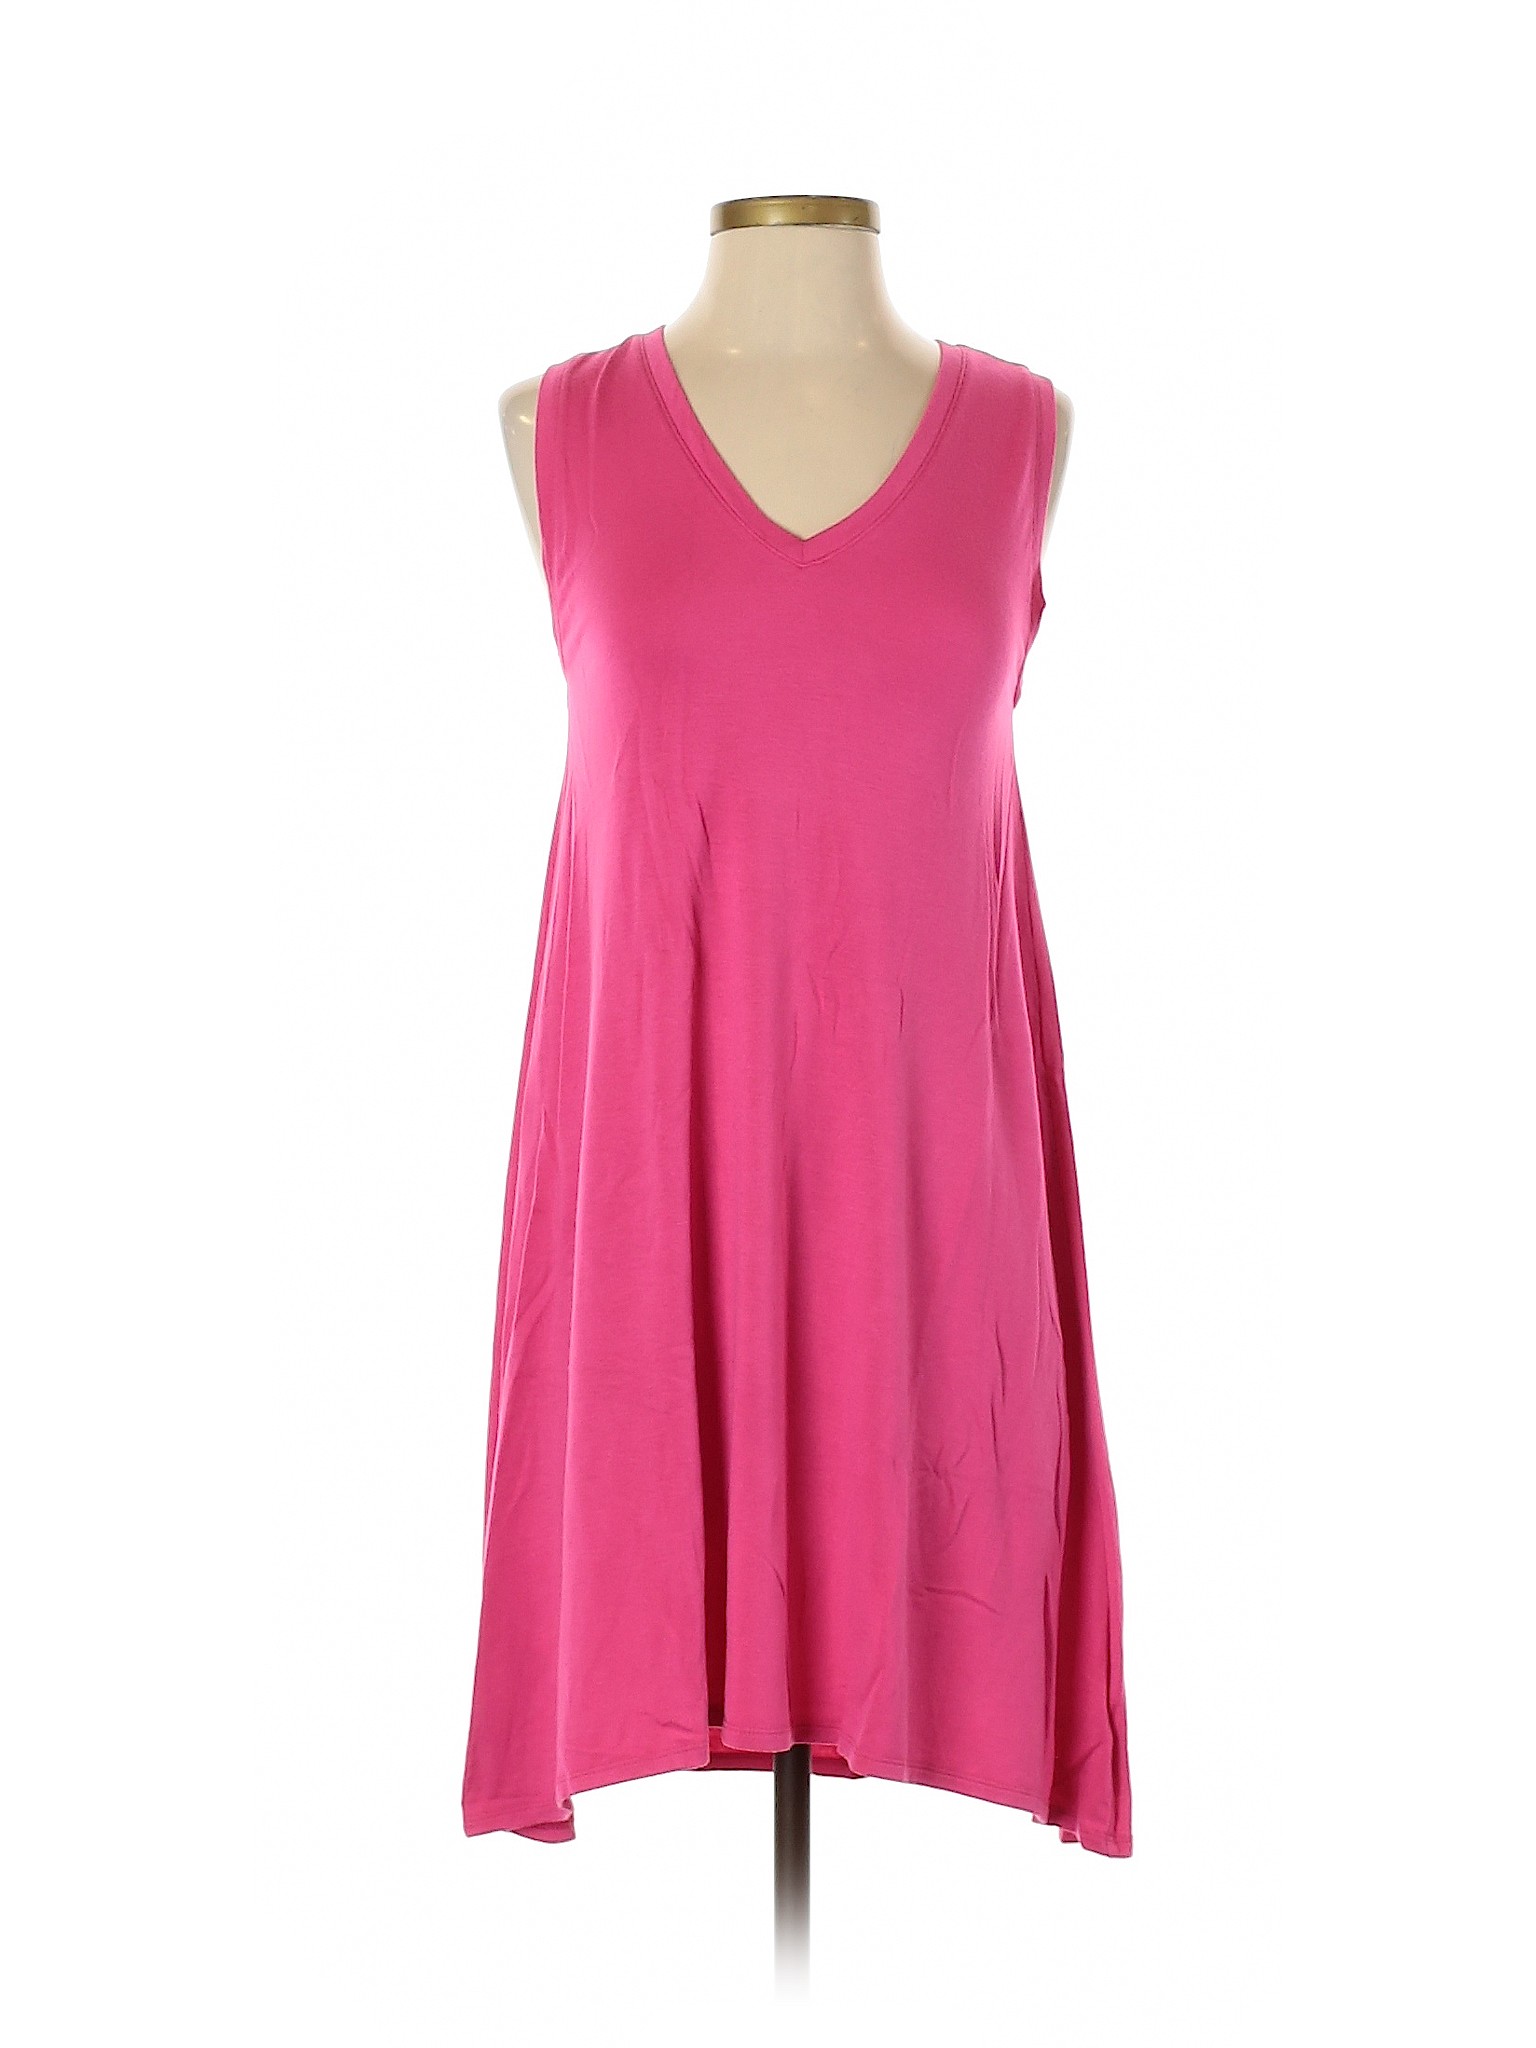 Gap Women Pink Casual Dress XS | eBay